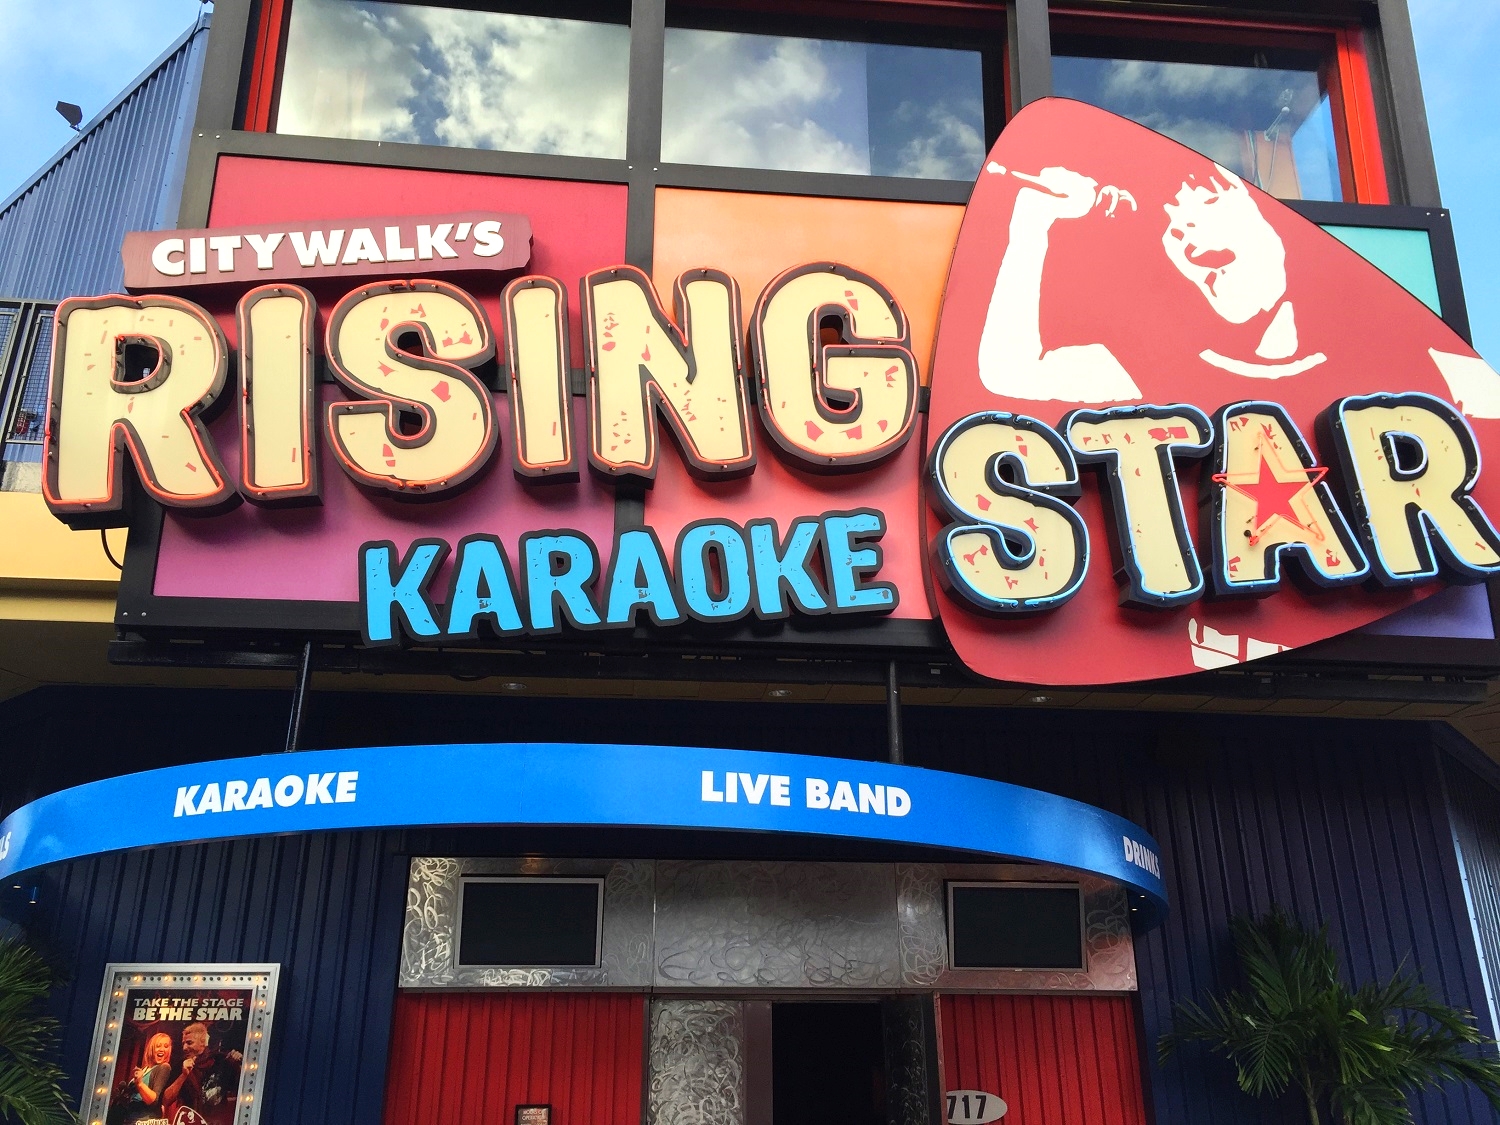 Karaoke at Rising Star in Orlando 